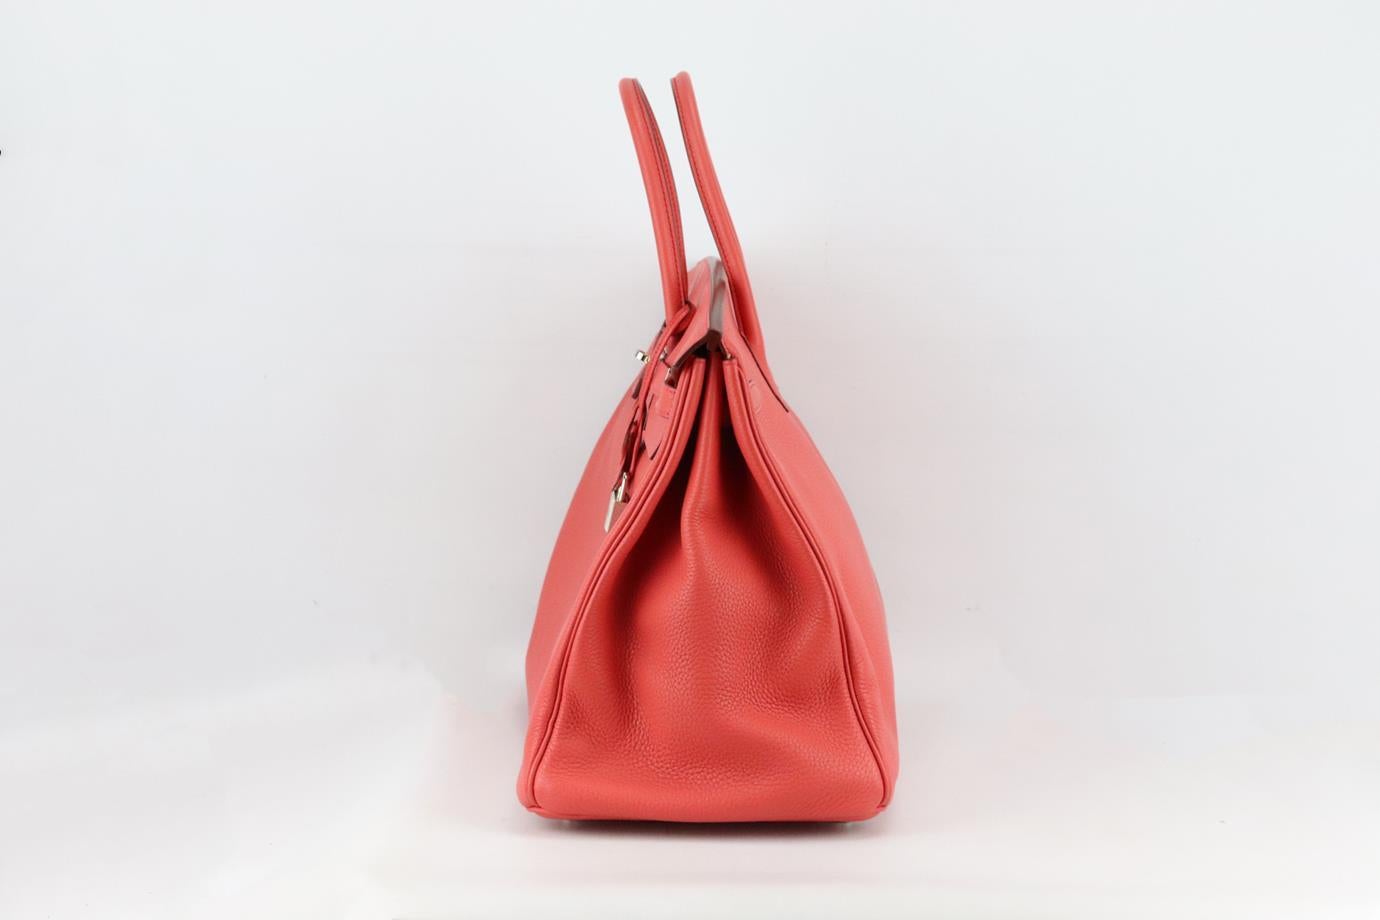 Hermès 2010 Birkin 40cm Togo Leather Bag Pour femmes en vente